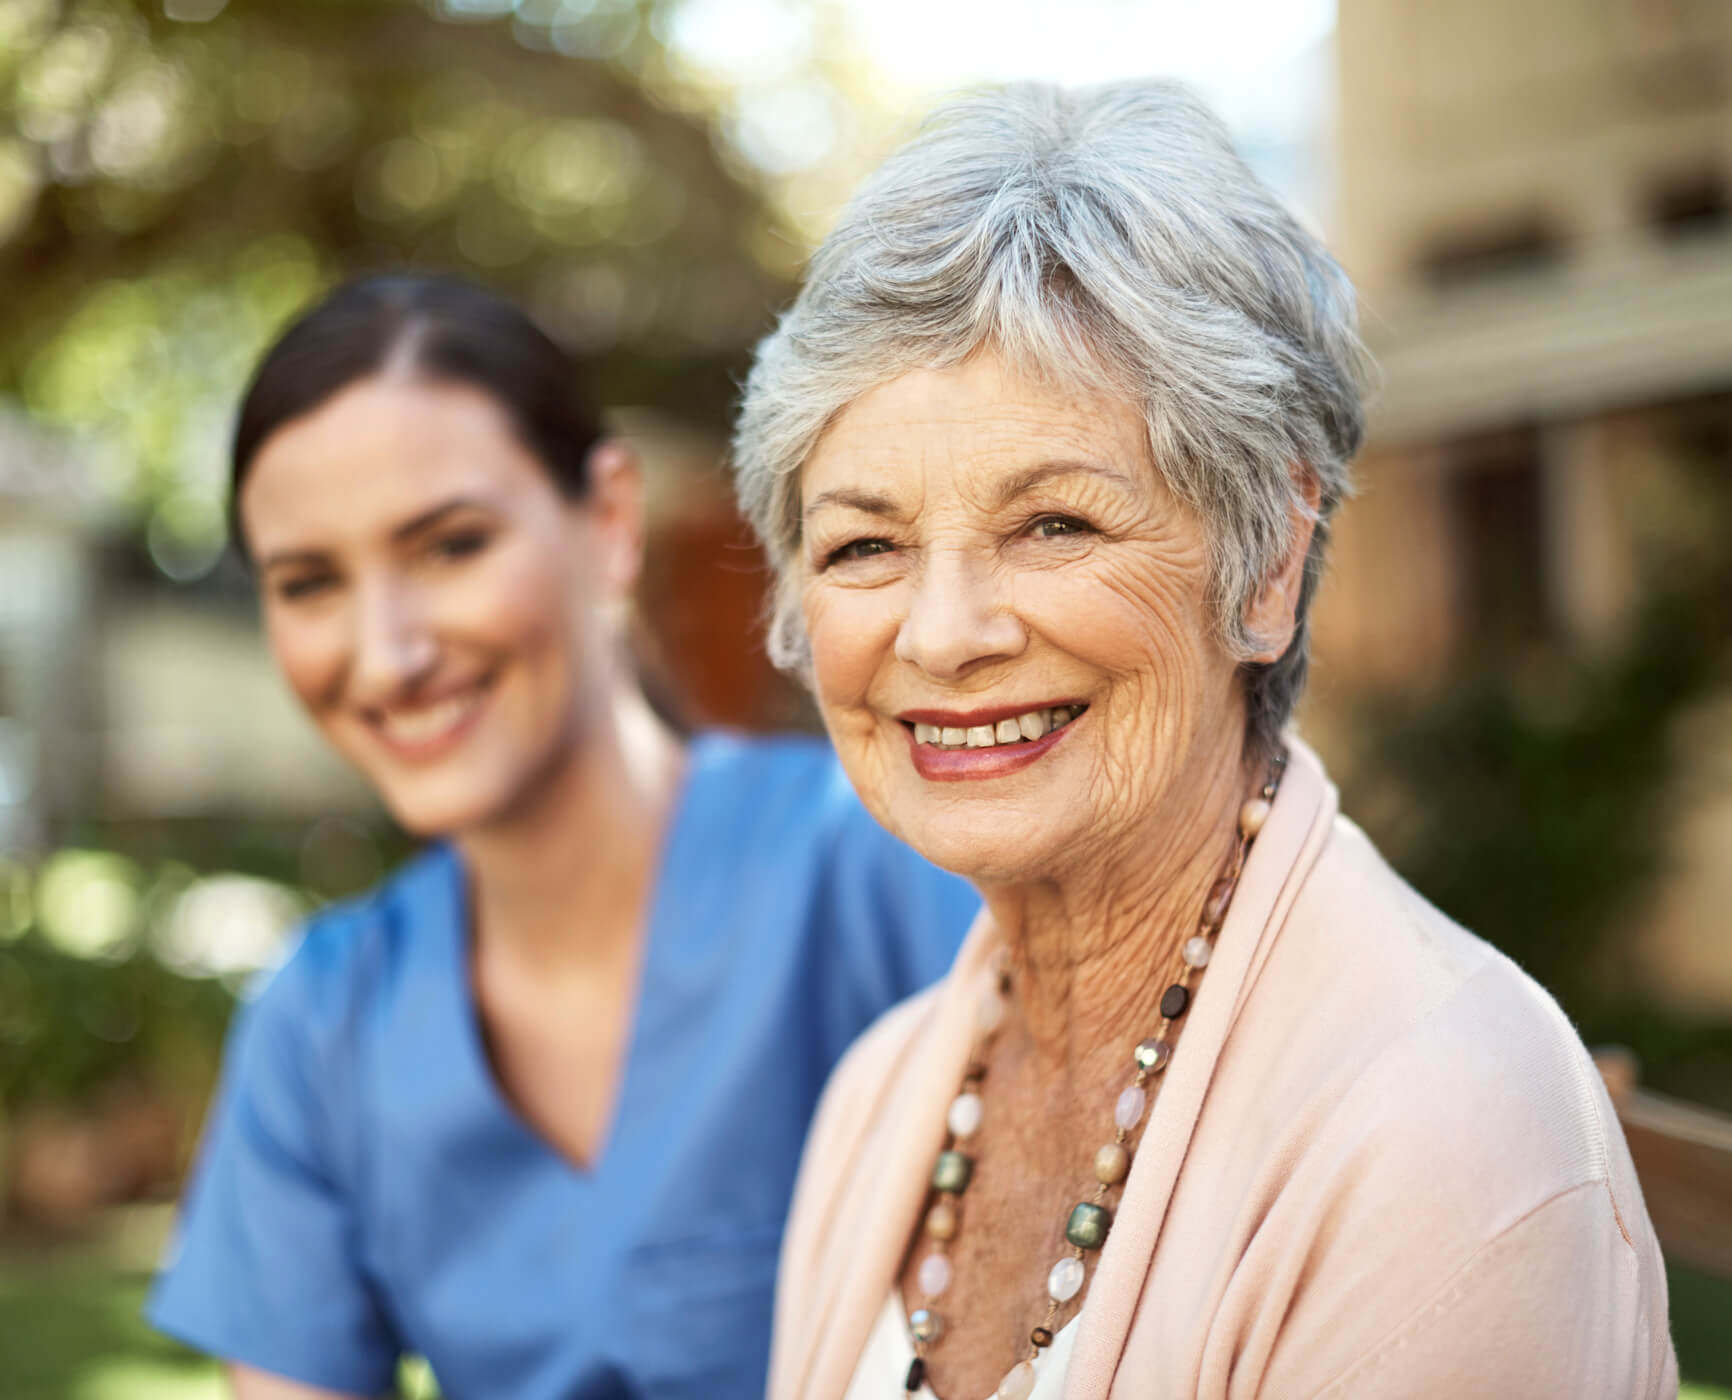 Smiling senior woman and nurse